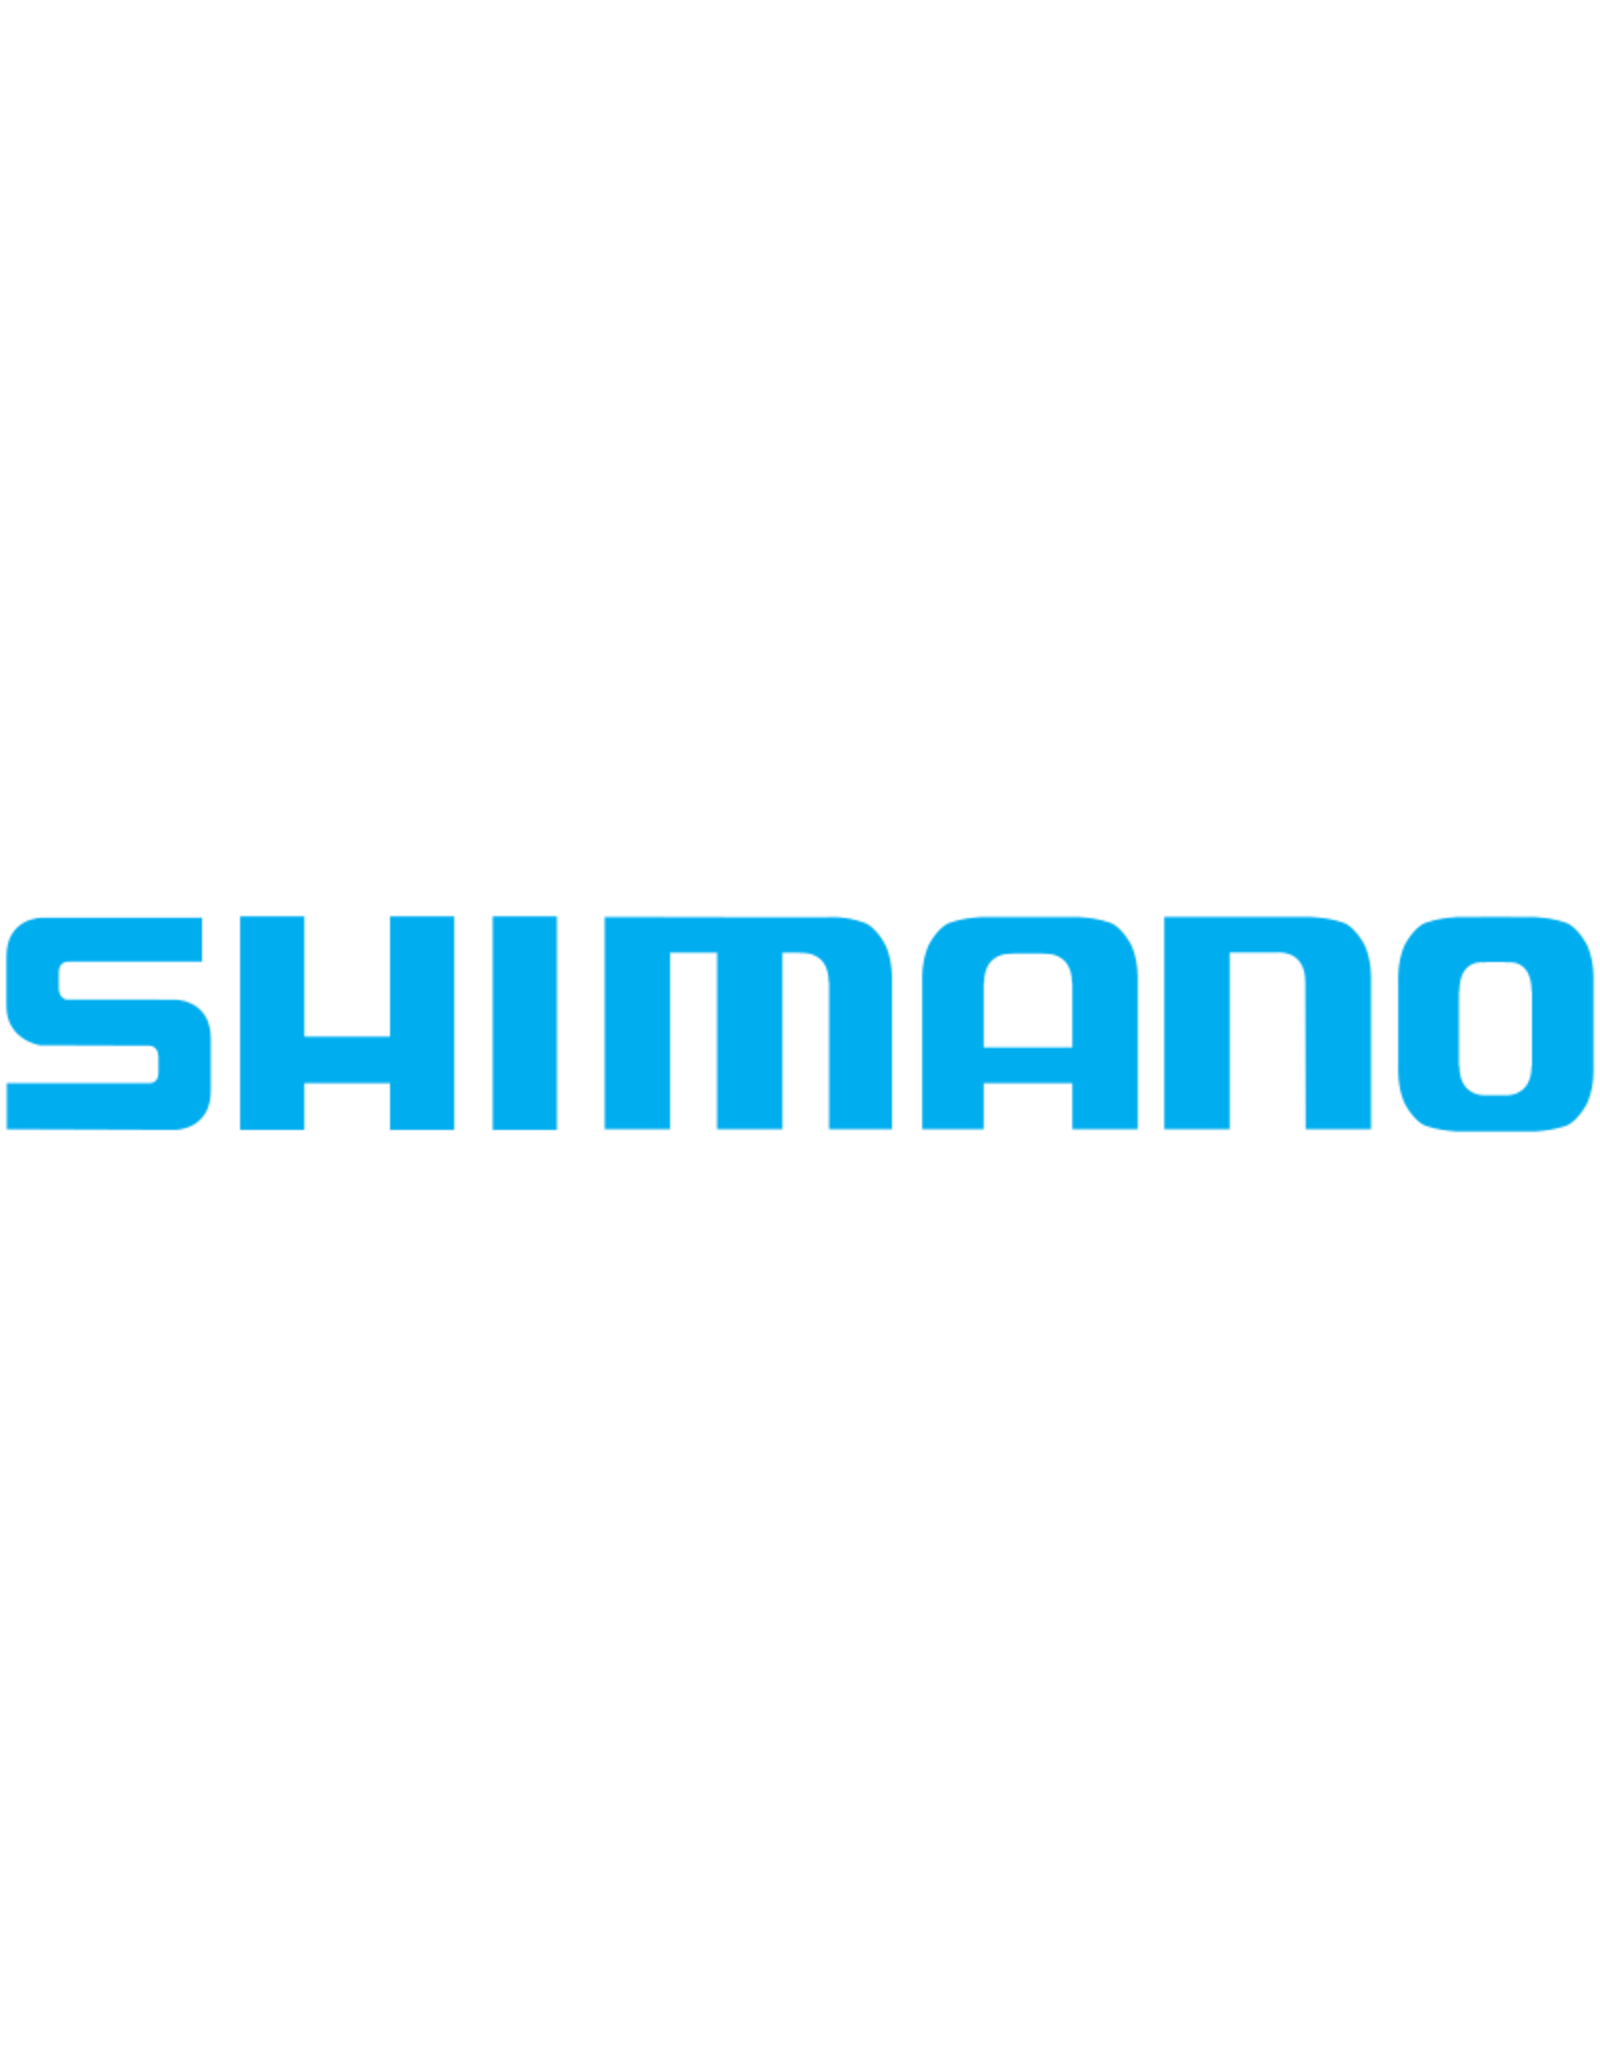 Shimano TLD0069  MAIN SHAFT/NLA